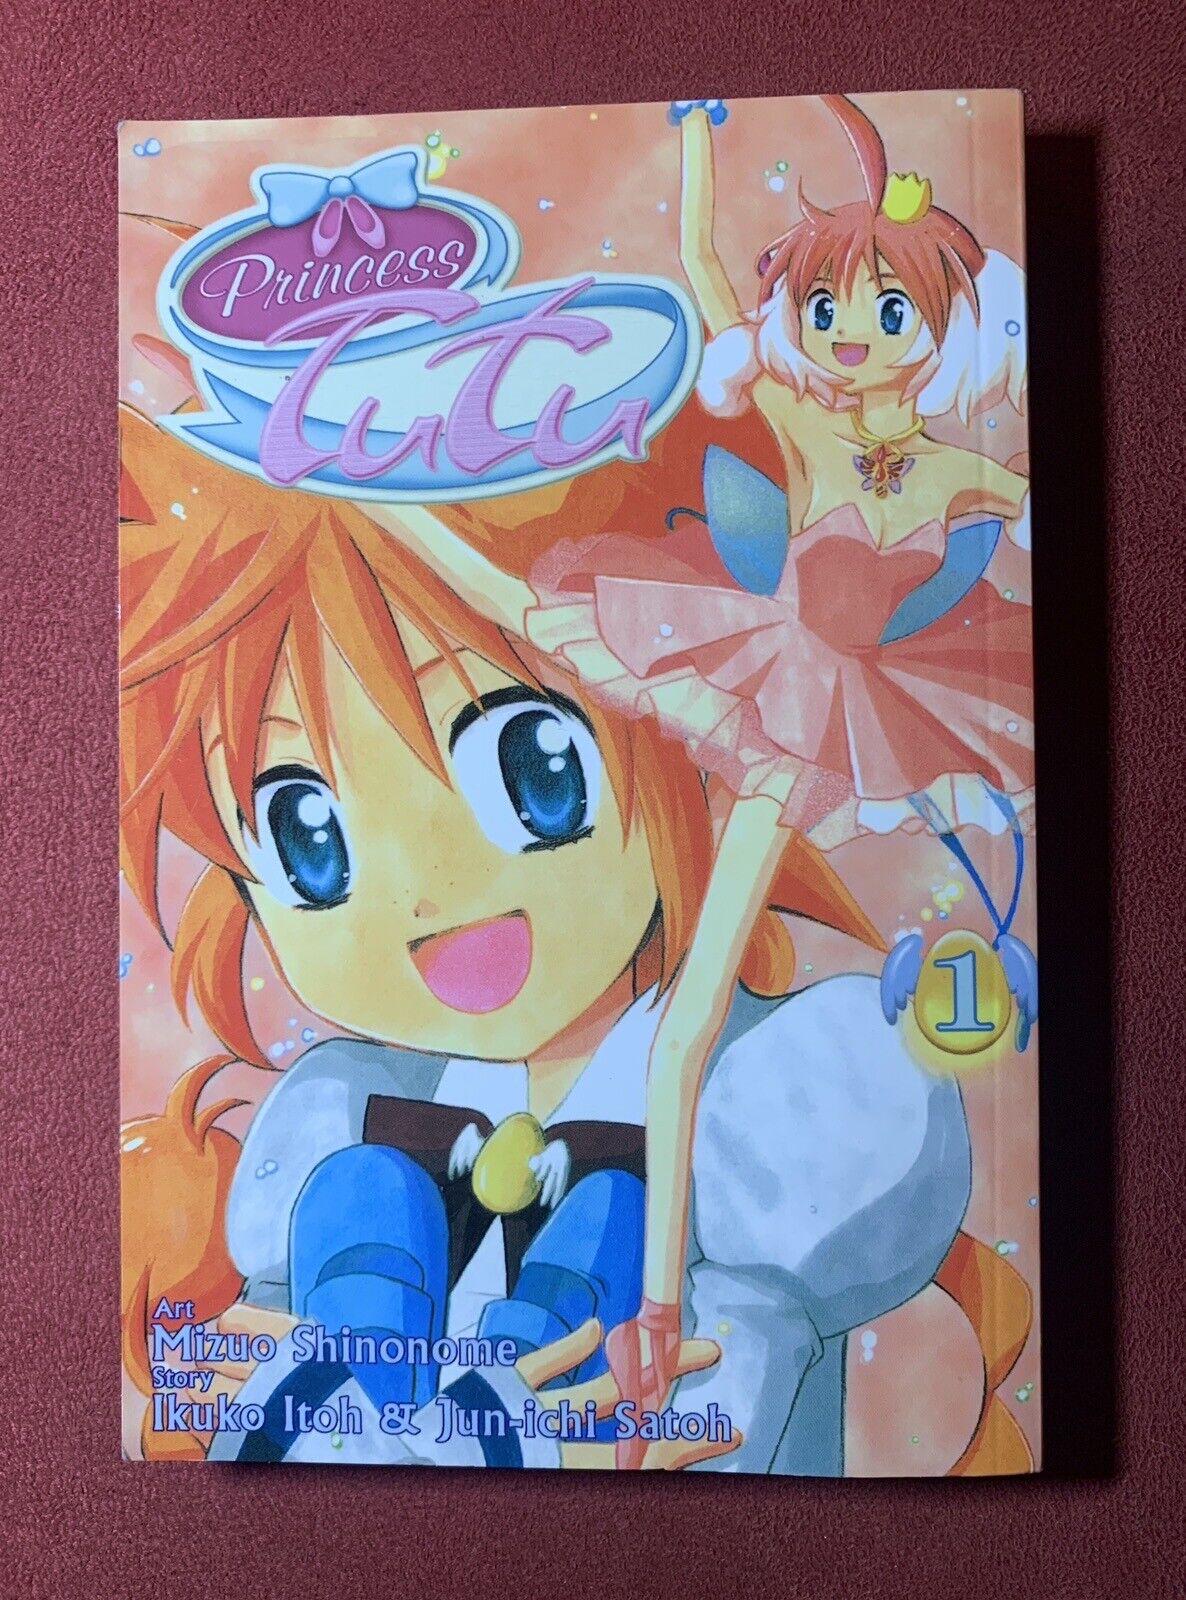 Princess Tu Tu, Vol. 1, by Shinonome/Ito/Satou, English Manga 2005 Tutu